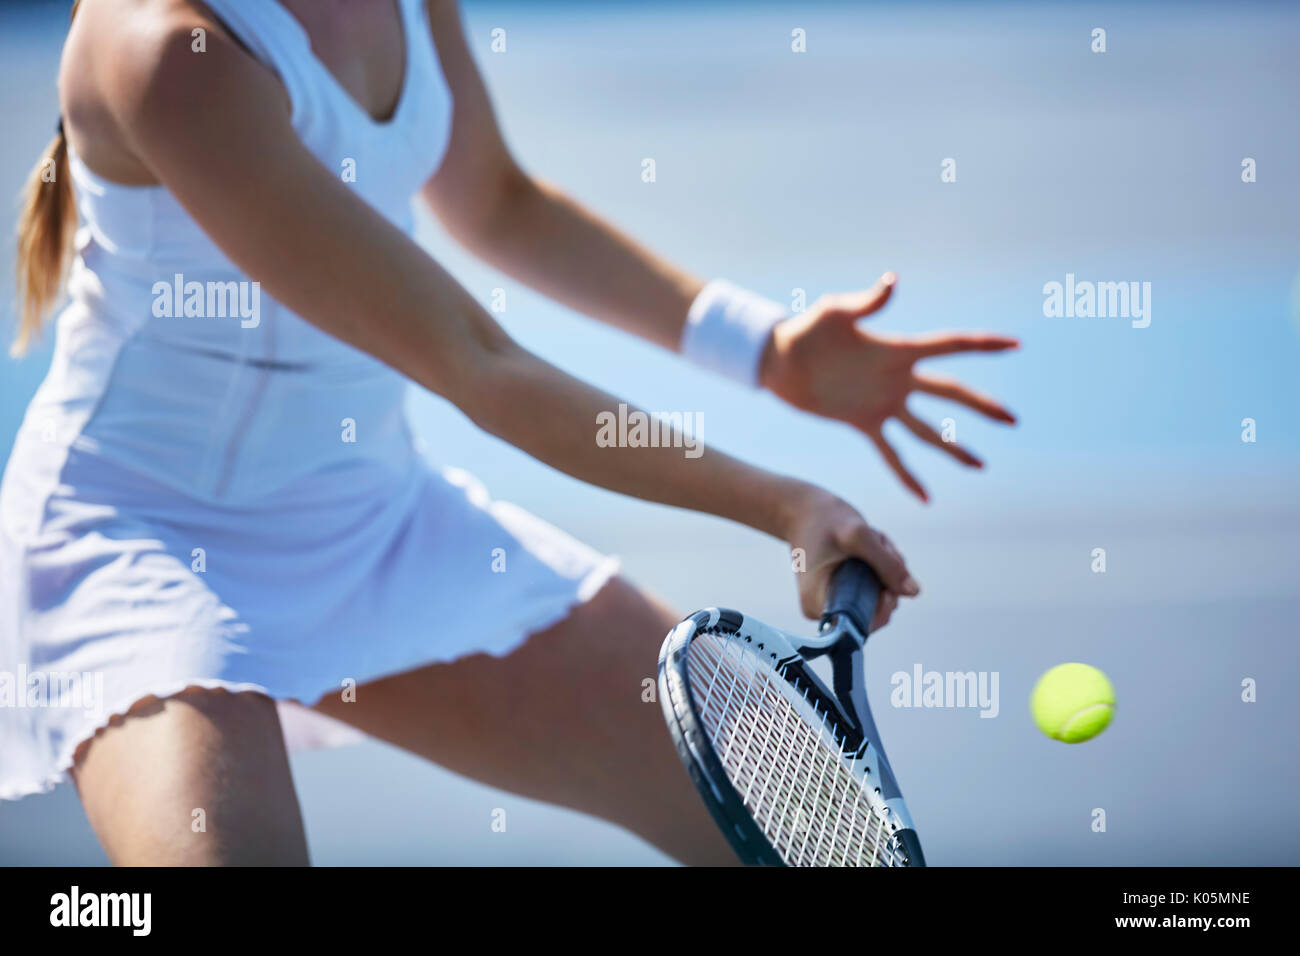 Female tennis player playing tennis, holding tennis racket Stock Photo